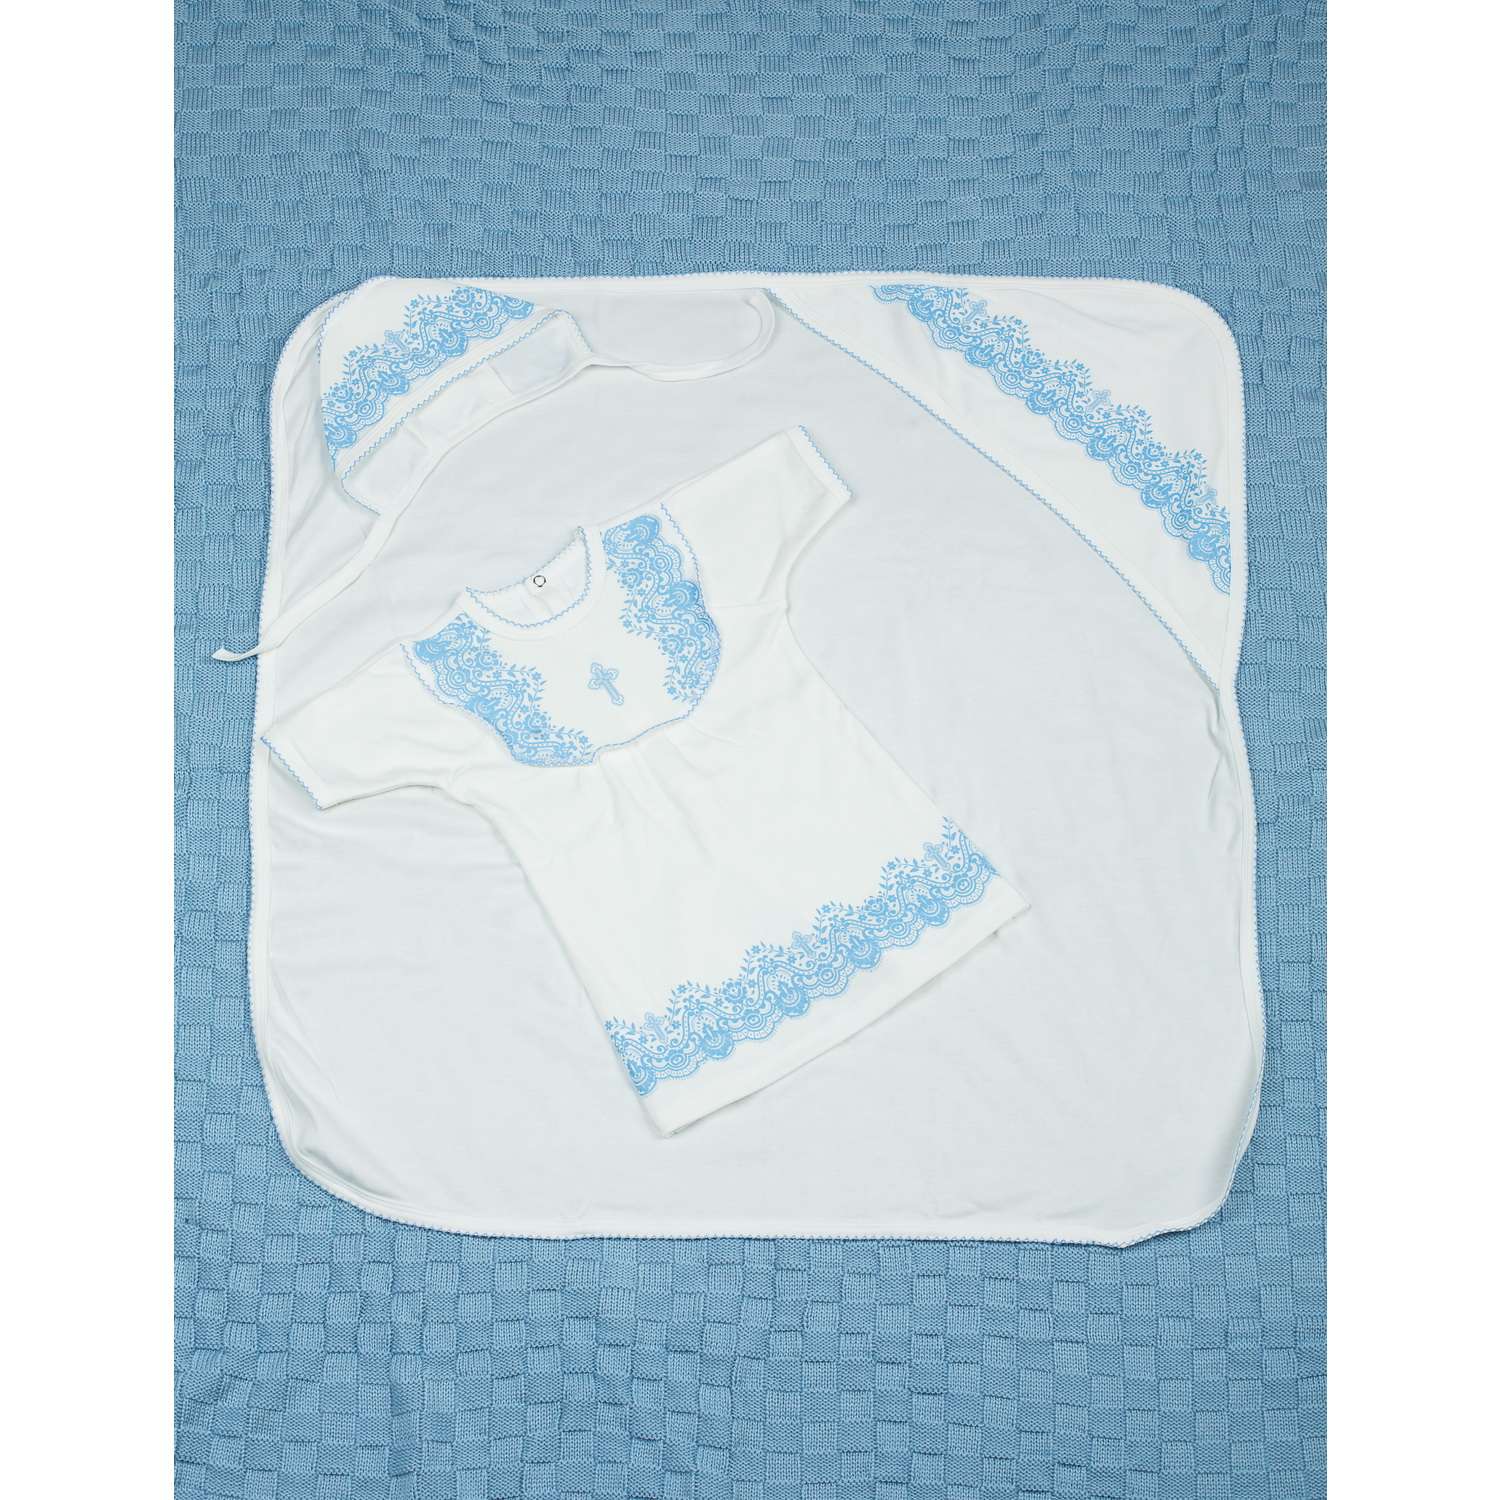 Крестильный набор KiMMi Baby Кб-1308081 молочный-голубой - фото 5